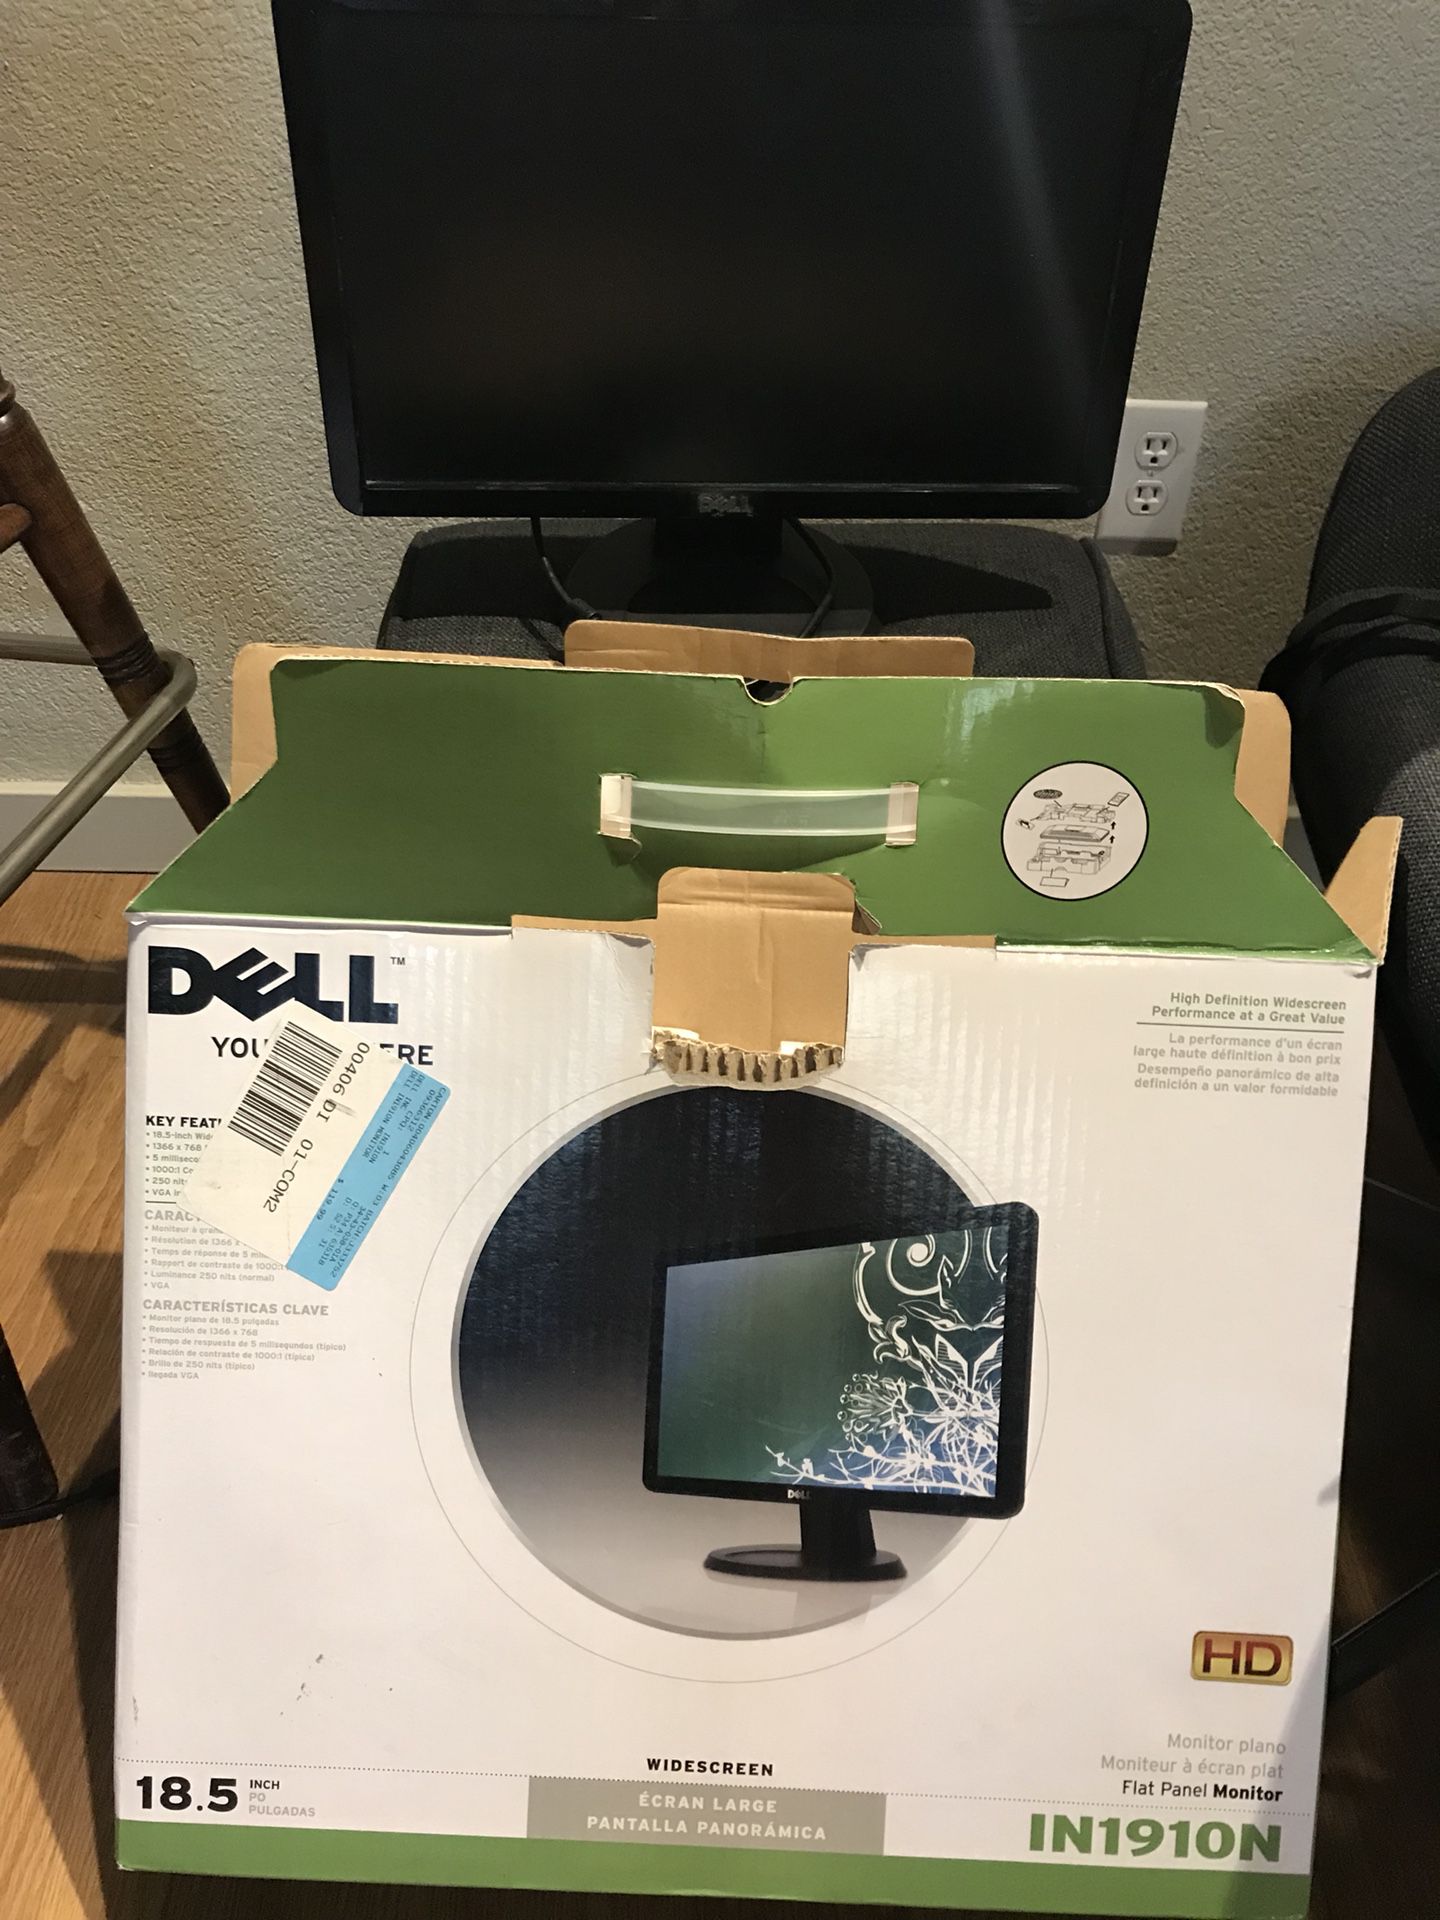 Dell, flatscreen, widescreen computer monitor